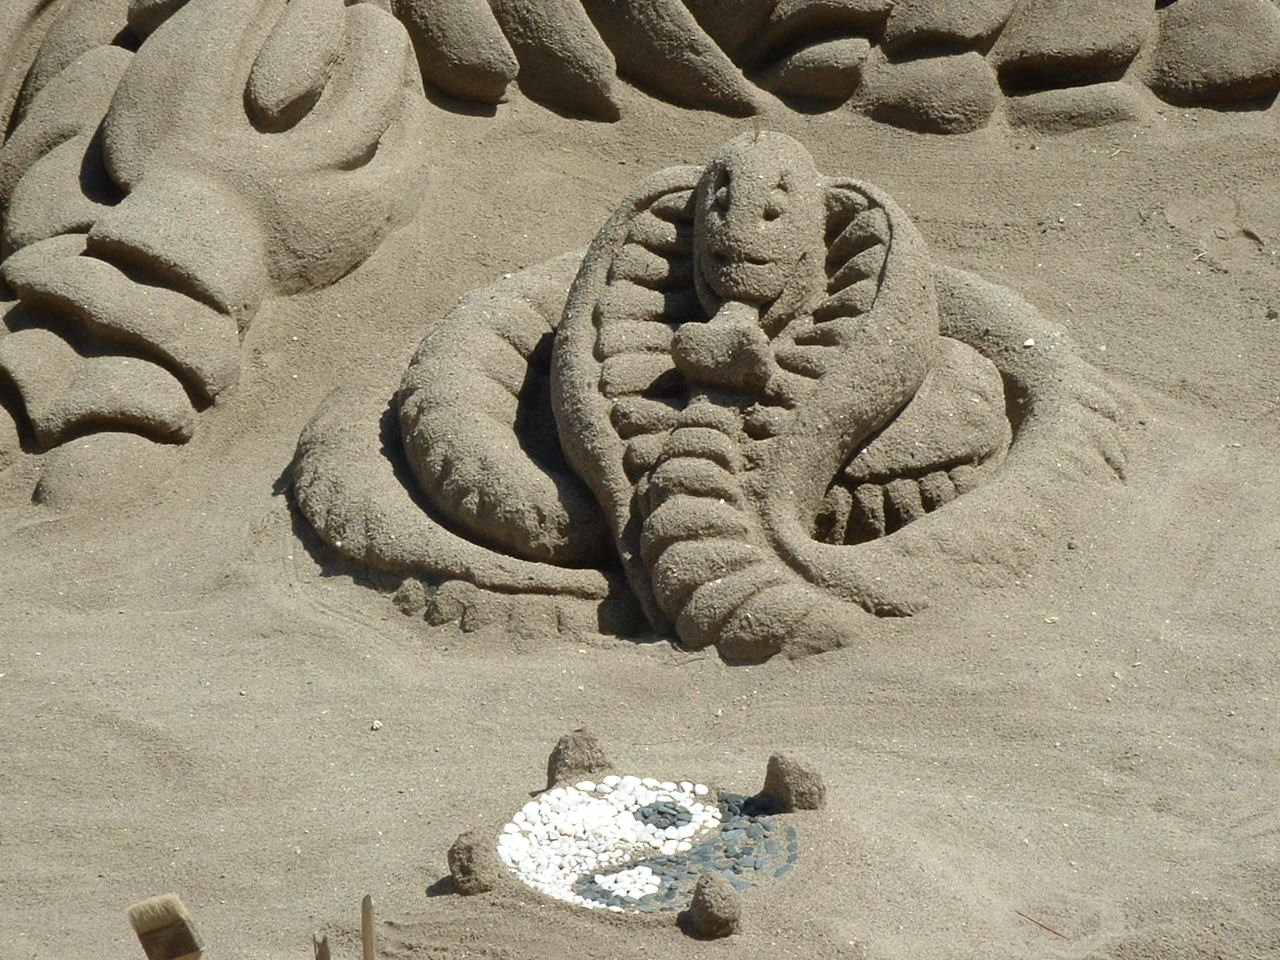 a sand sculpture of an elephant made of human like materials